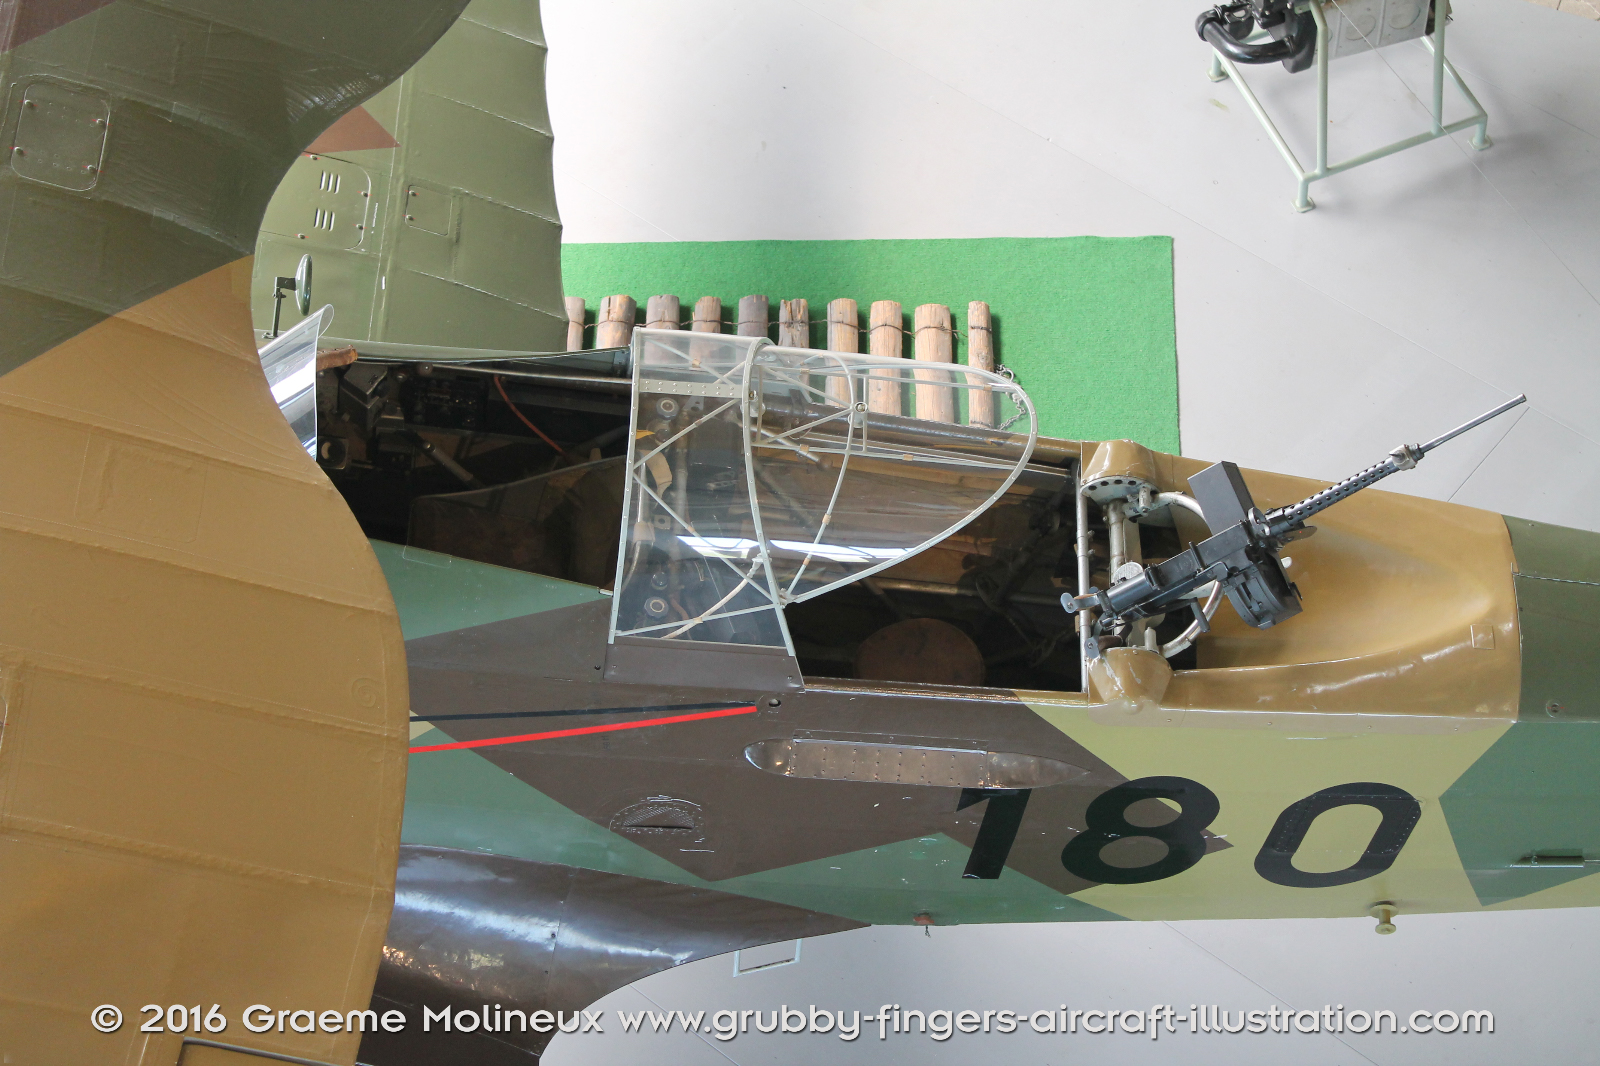 K+W_C-35_180_Swiss_Air_Force_Museum_2015_40_GrubbyFingers